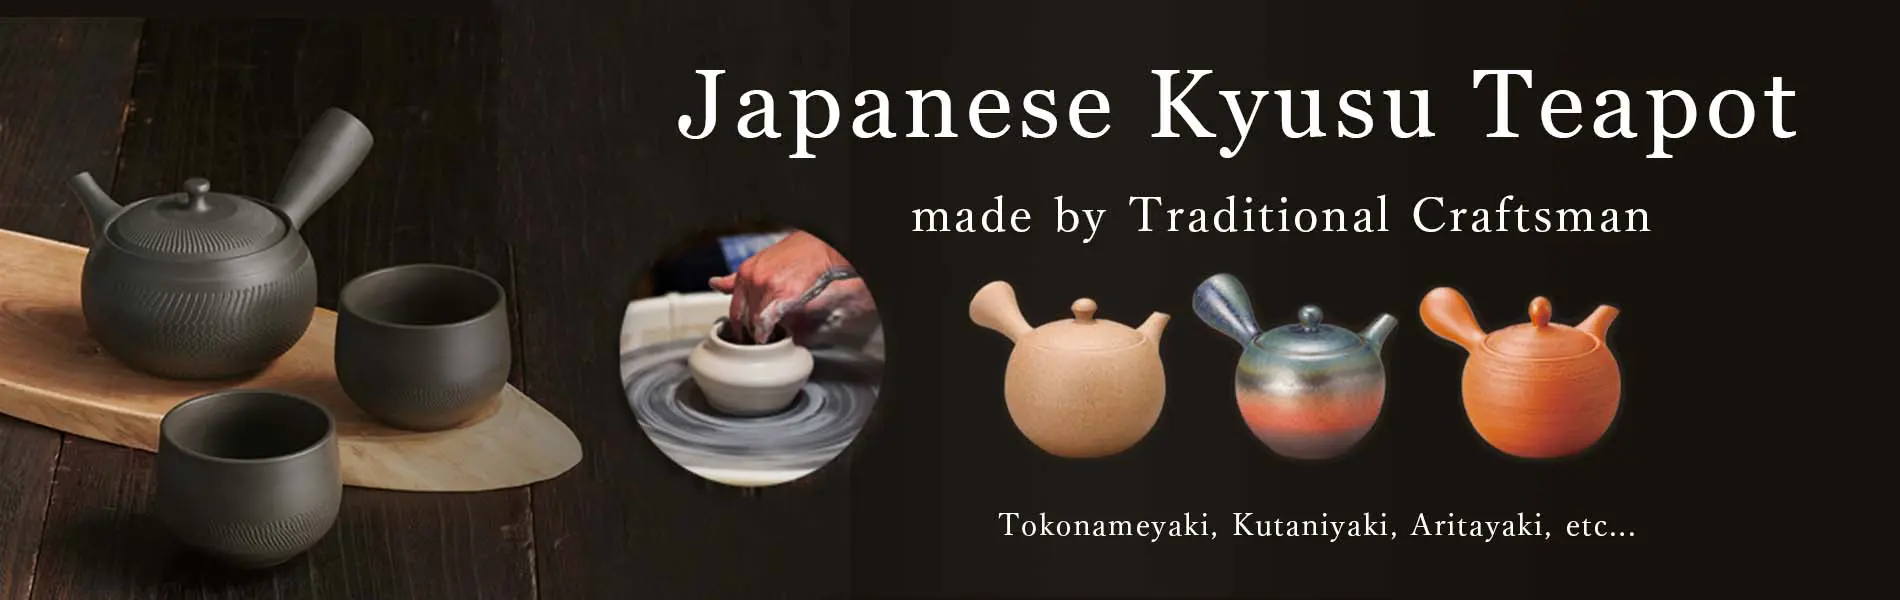 Japanese Kyusu Teapot | made by traditional crafts man | Tokonameyaki, Kutaniyaki, Aritayaki and more...